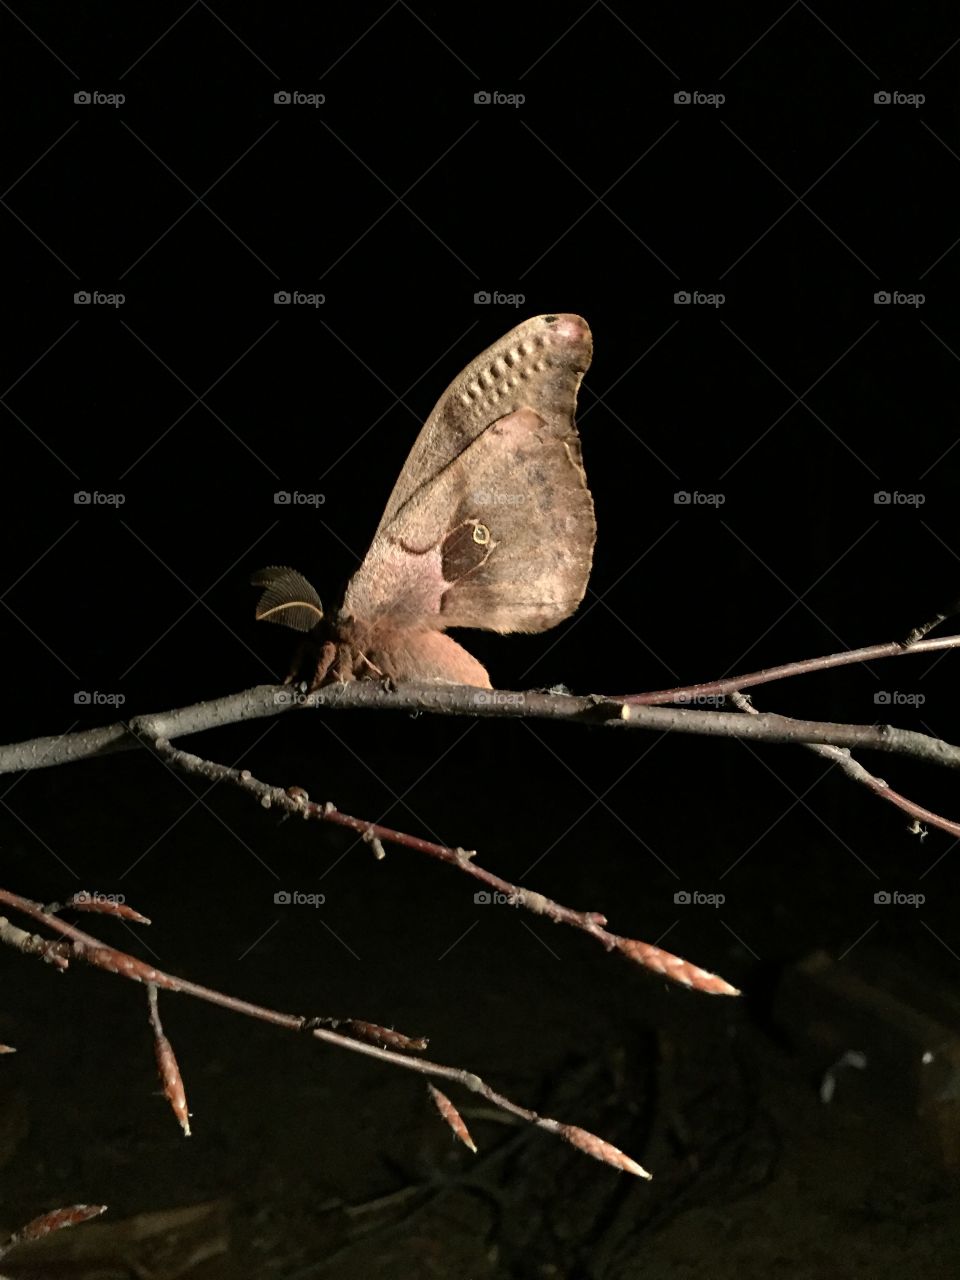 Moth in the night